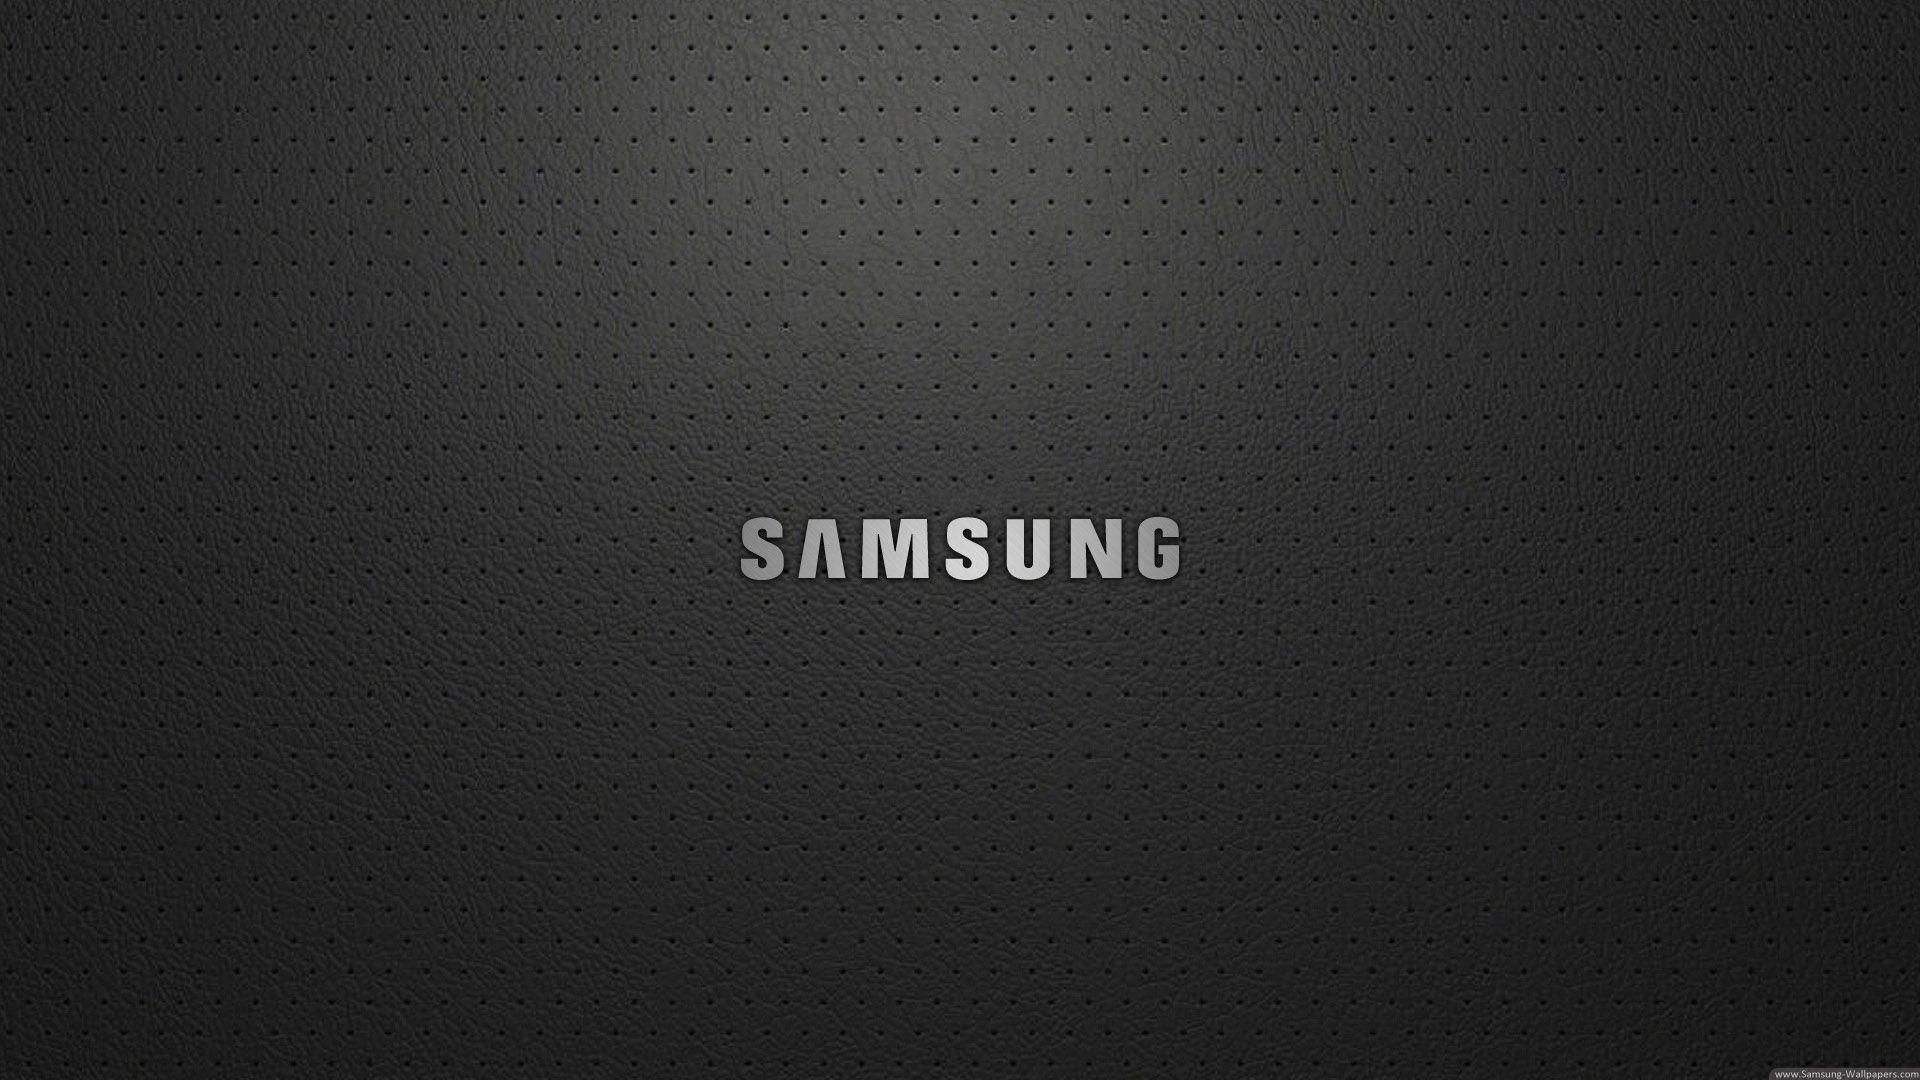 Samsung Galaxy S4 Logo - Samsung Logo Wallpaper